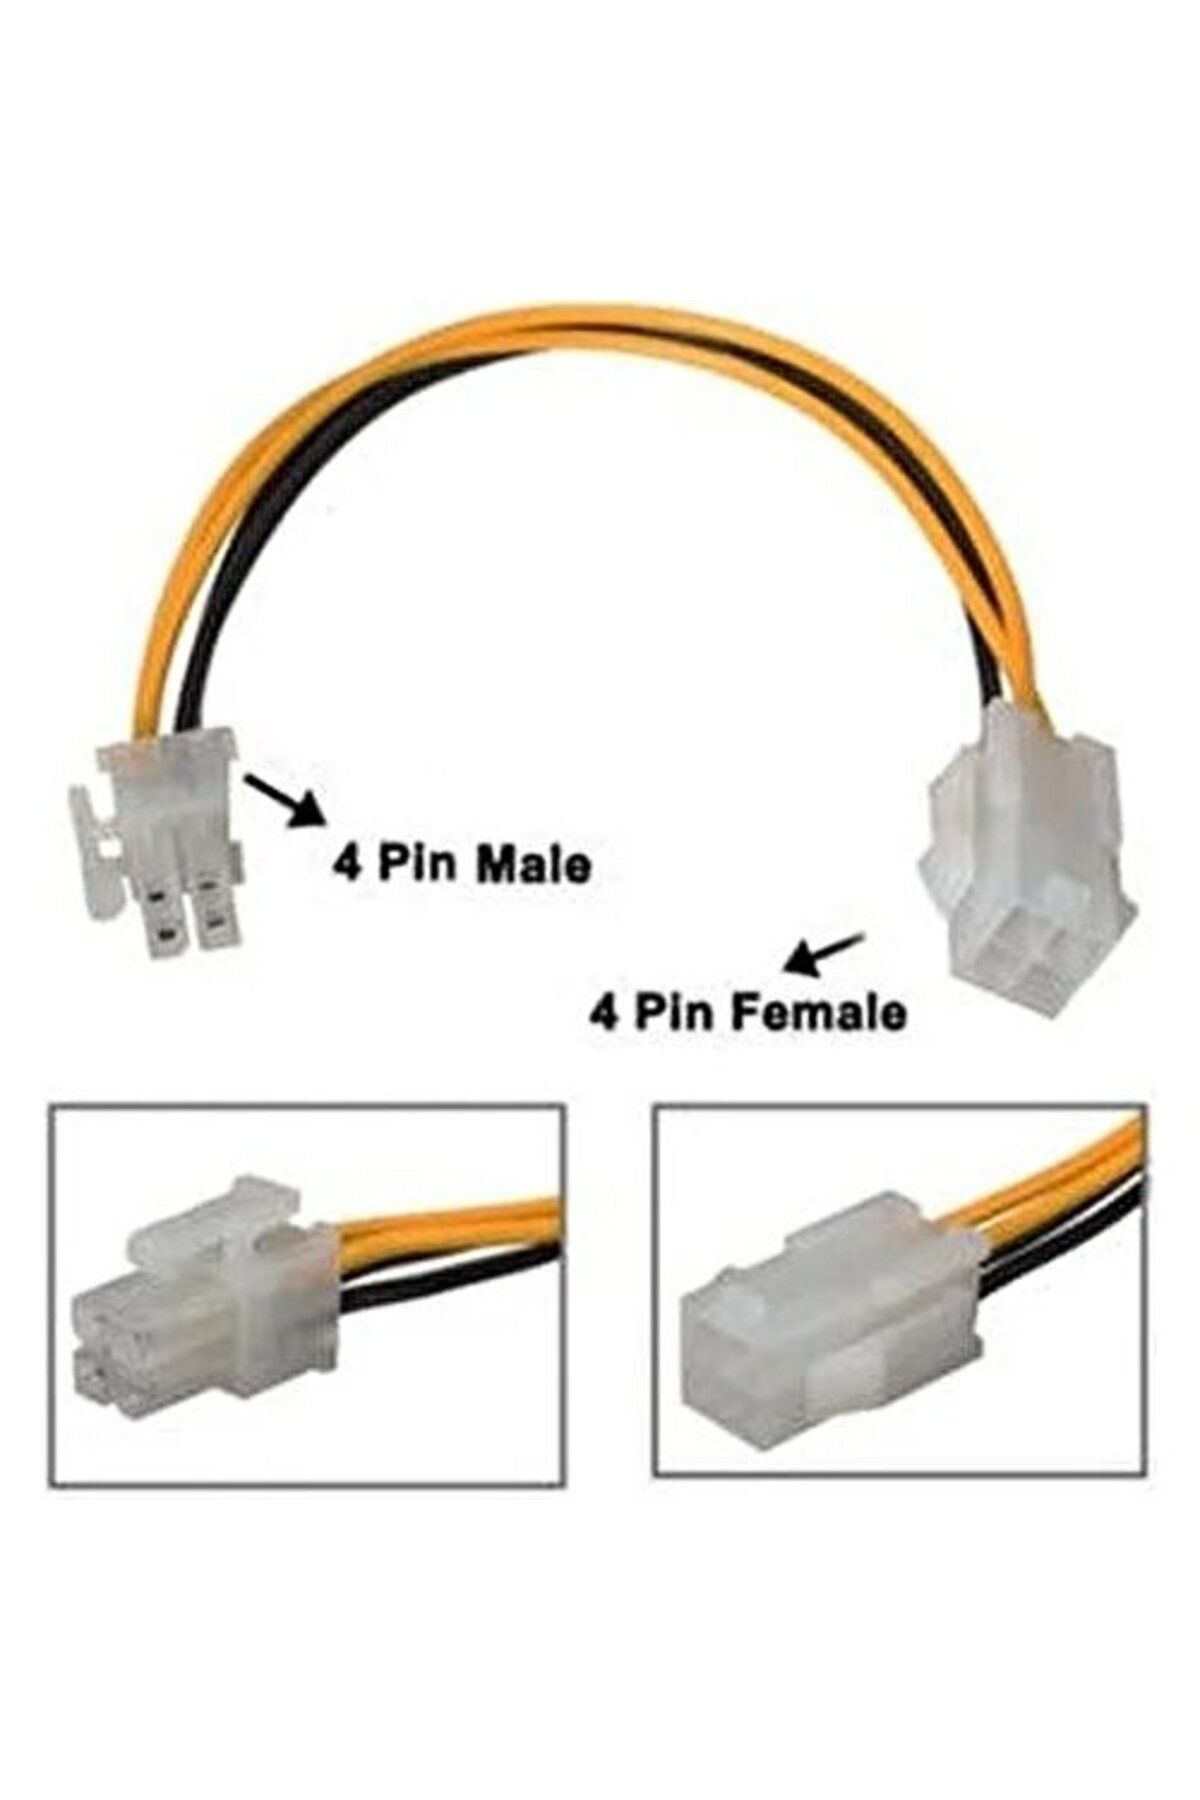 KEEPRO 4 pin power uzatma kablosu 4 pin dişi erkek kablo 4 pin cpu uzatma kablosu 20 cm